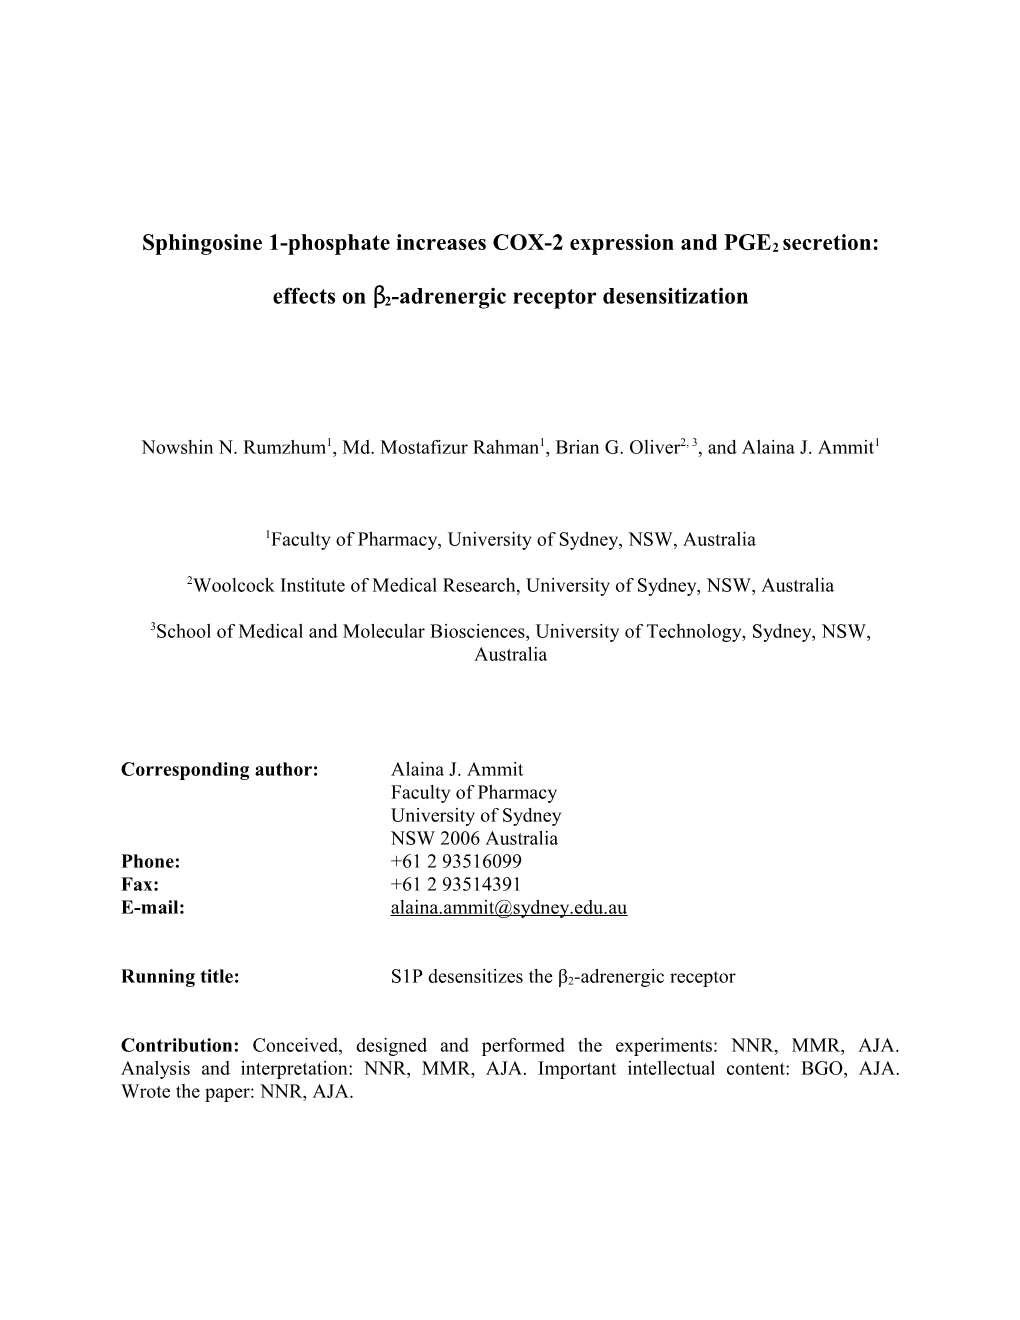 Sphingosine 1-Phosphate Increases COX-2 Expression and PGE2 Secretion: Effects on Β2-Adrenergic